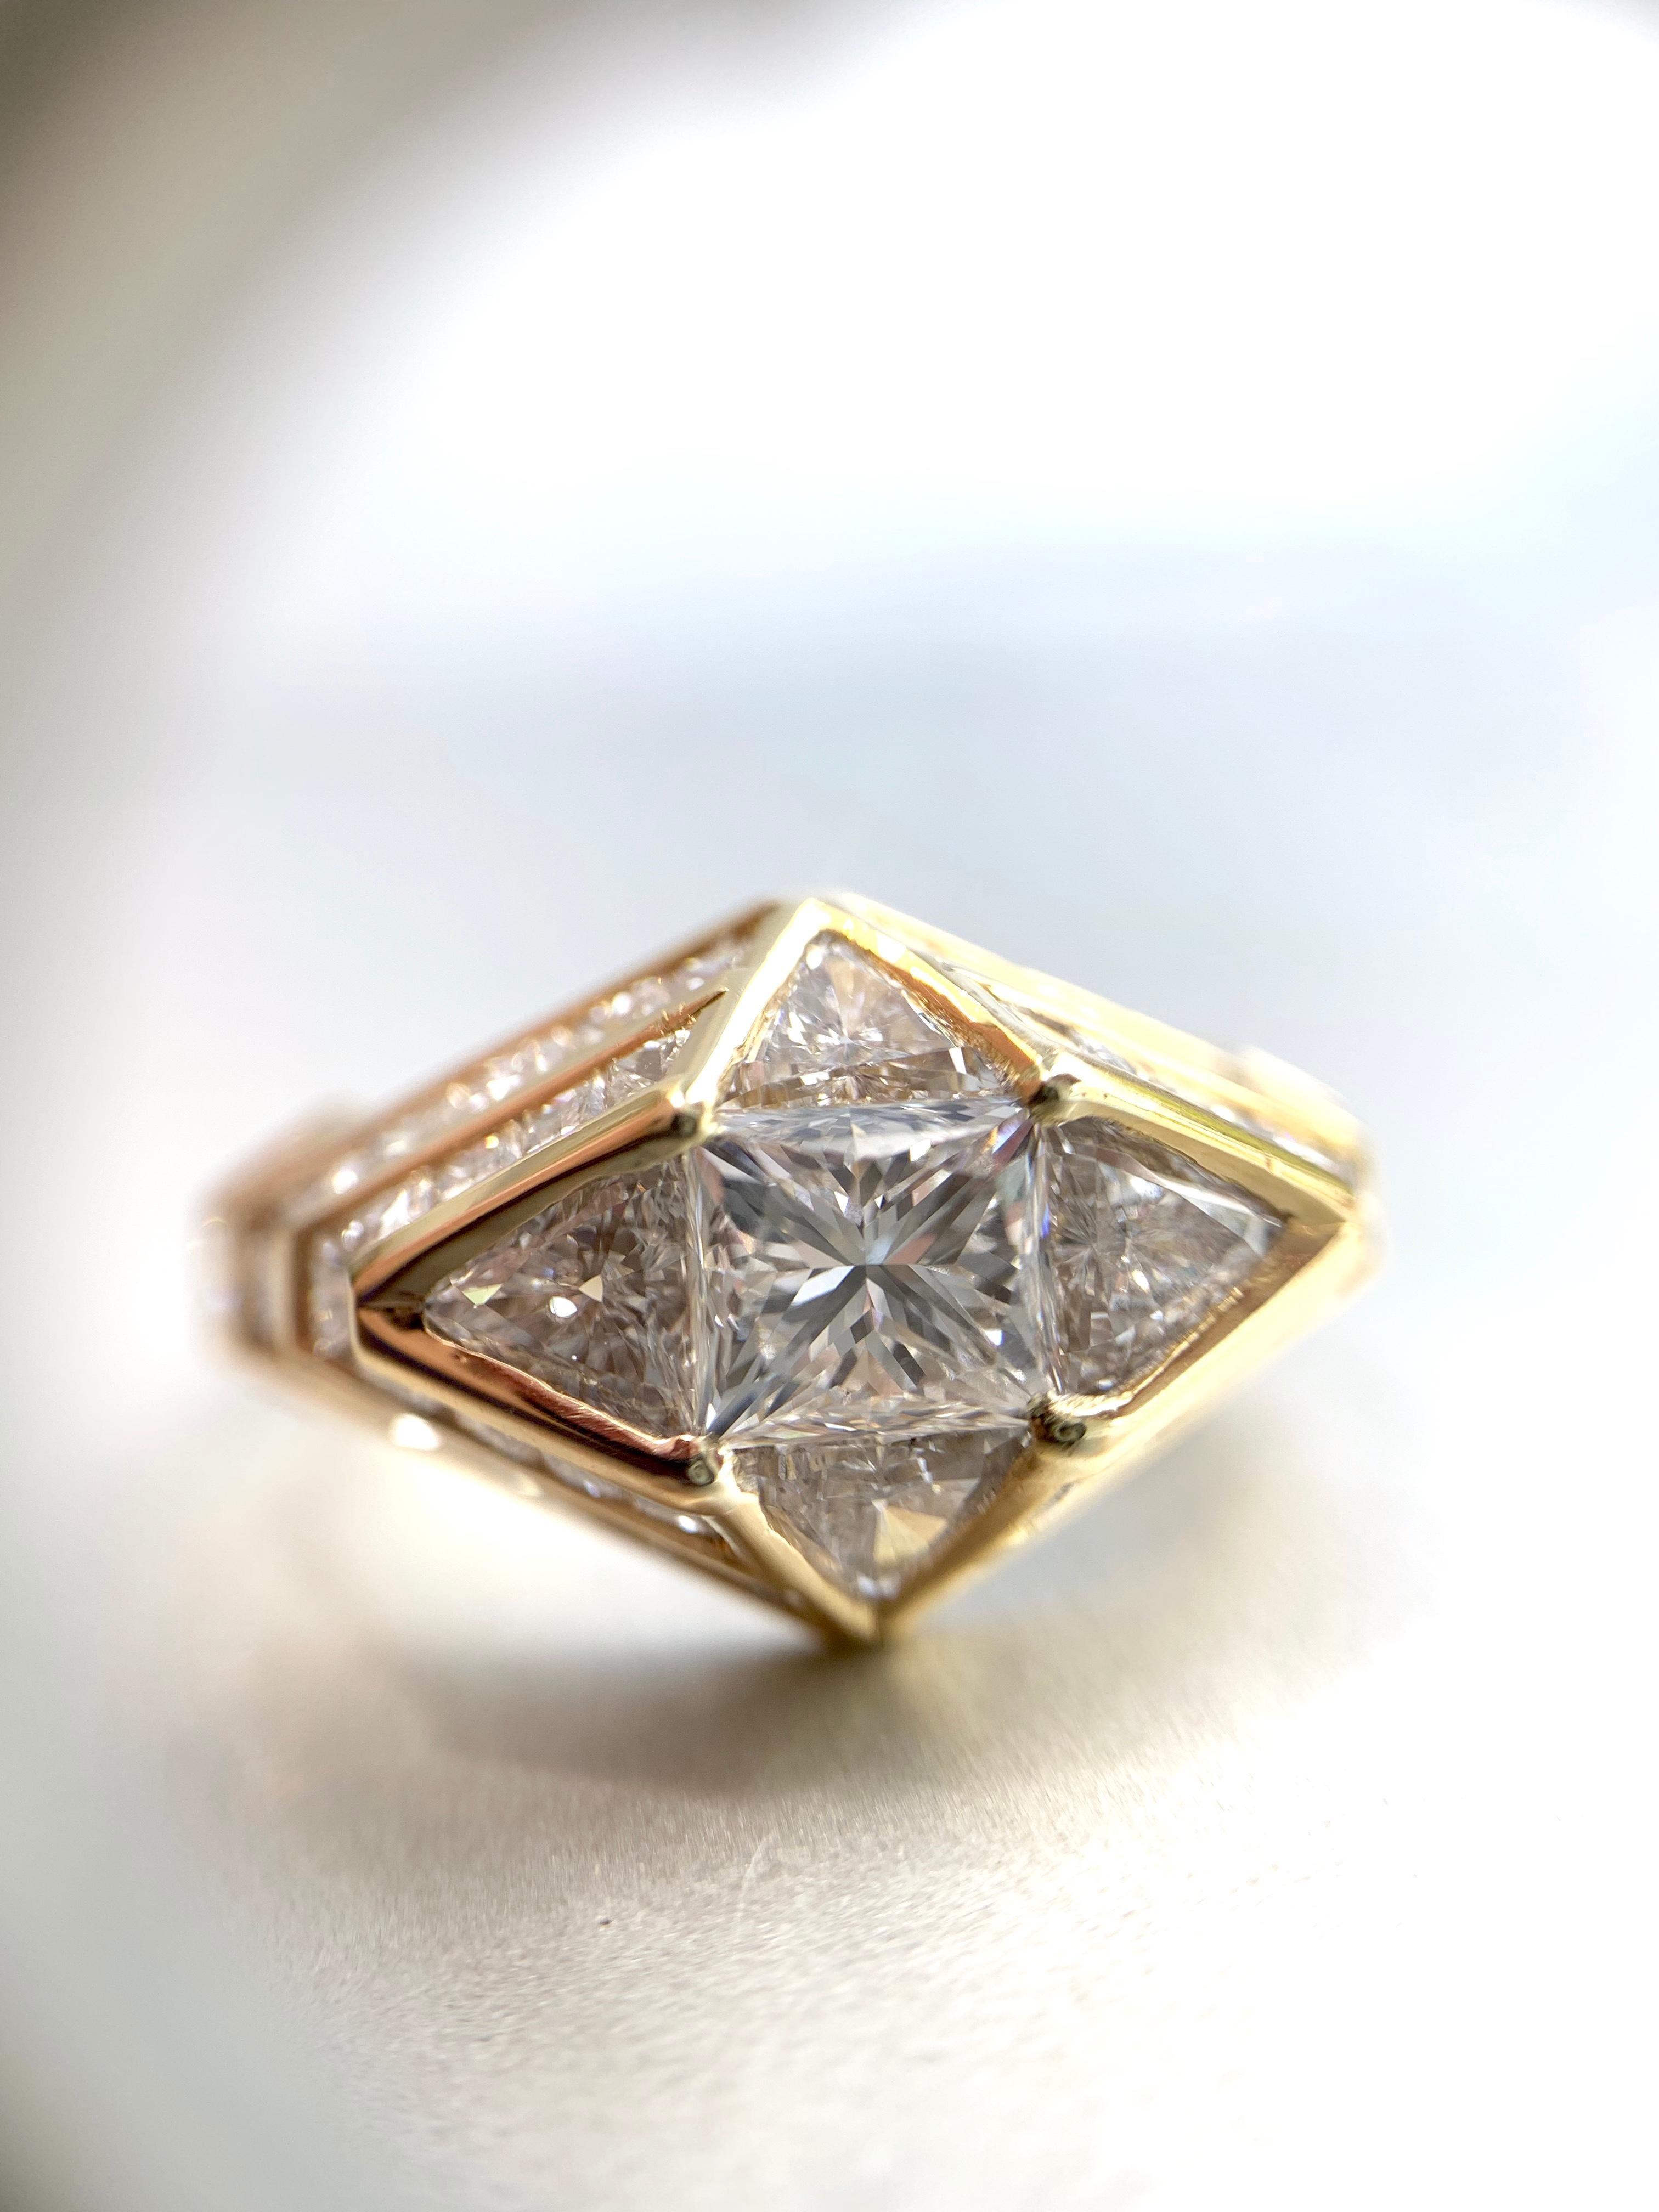 18 Karat Art Deco Inspired Diamond Ring 5.47 Carat Total Weight For Sale 8